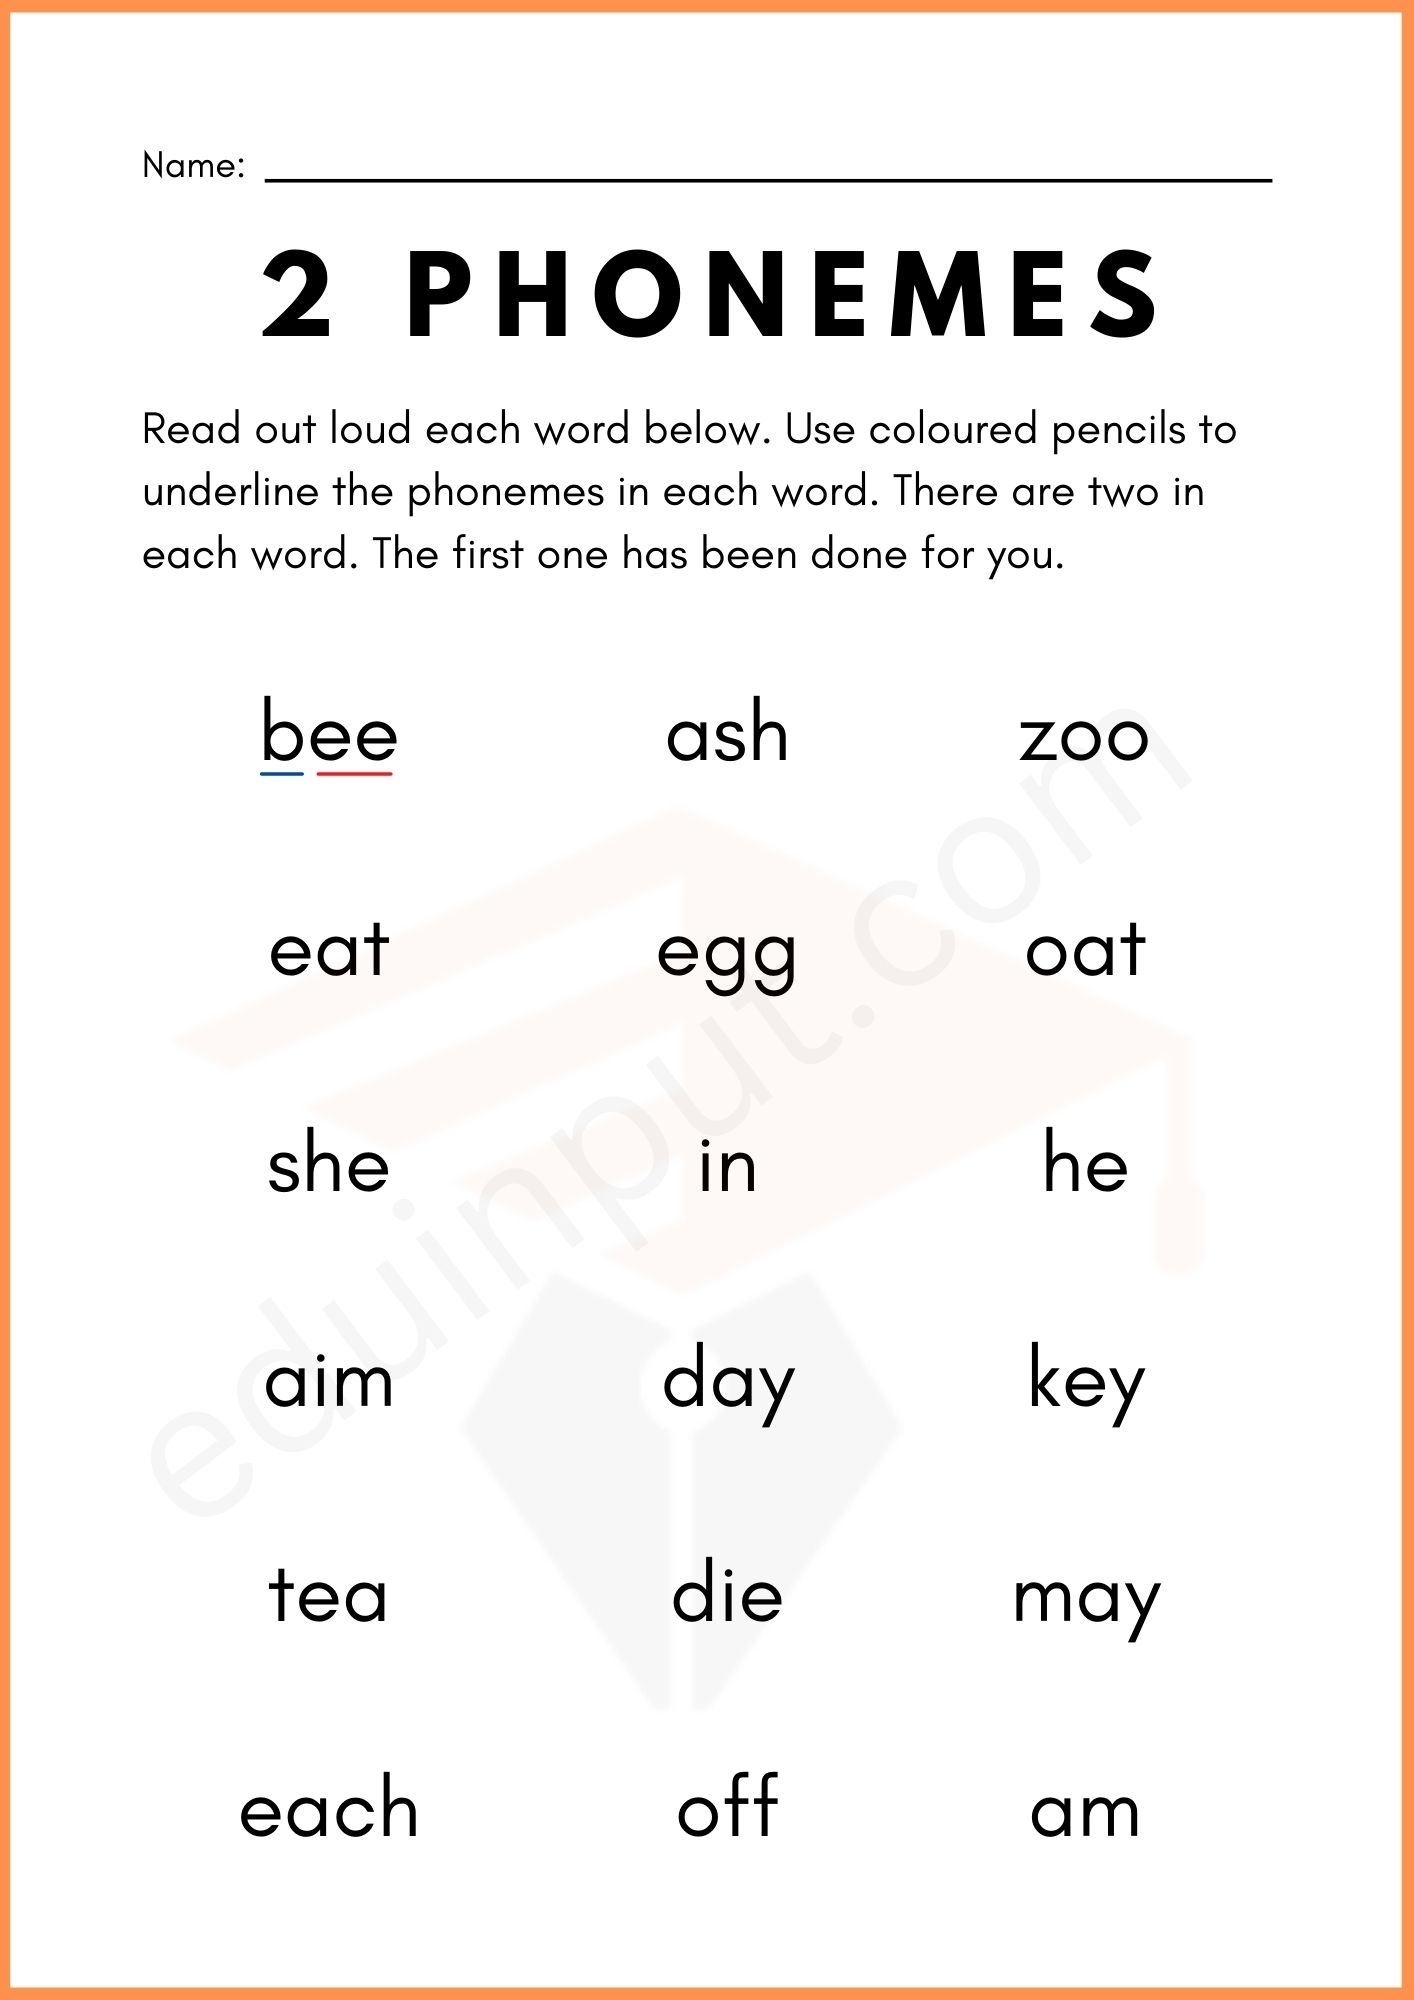 Phenomes Worksheets for Kindergarten